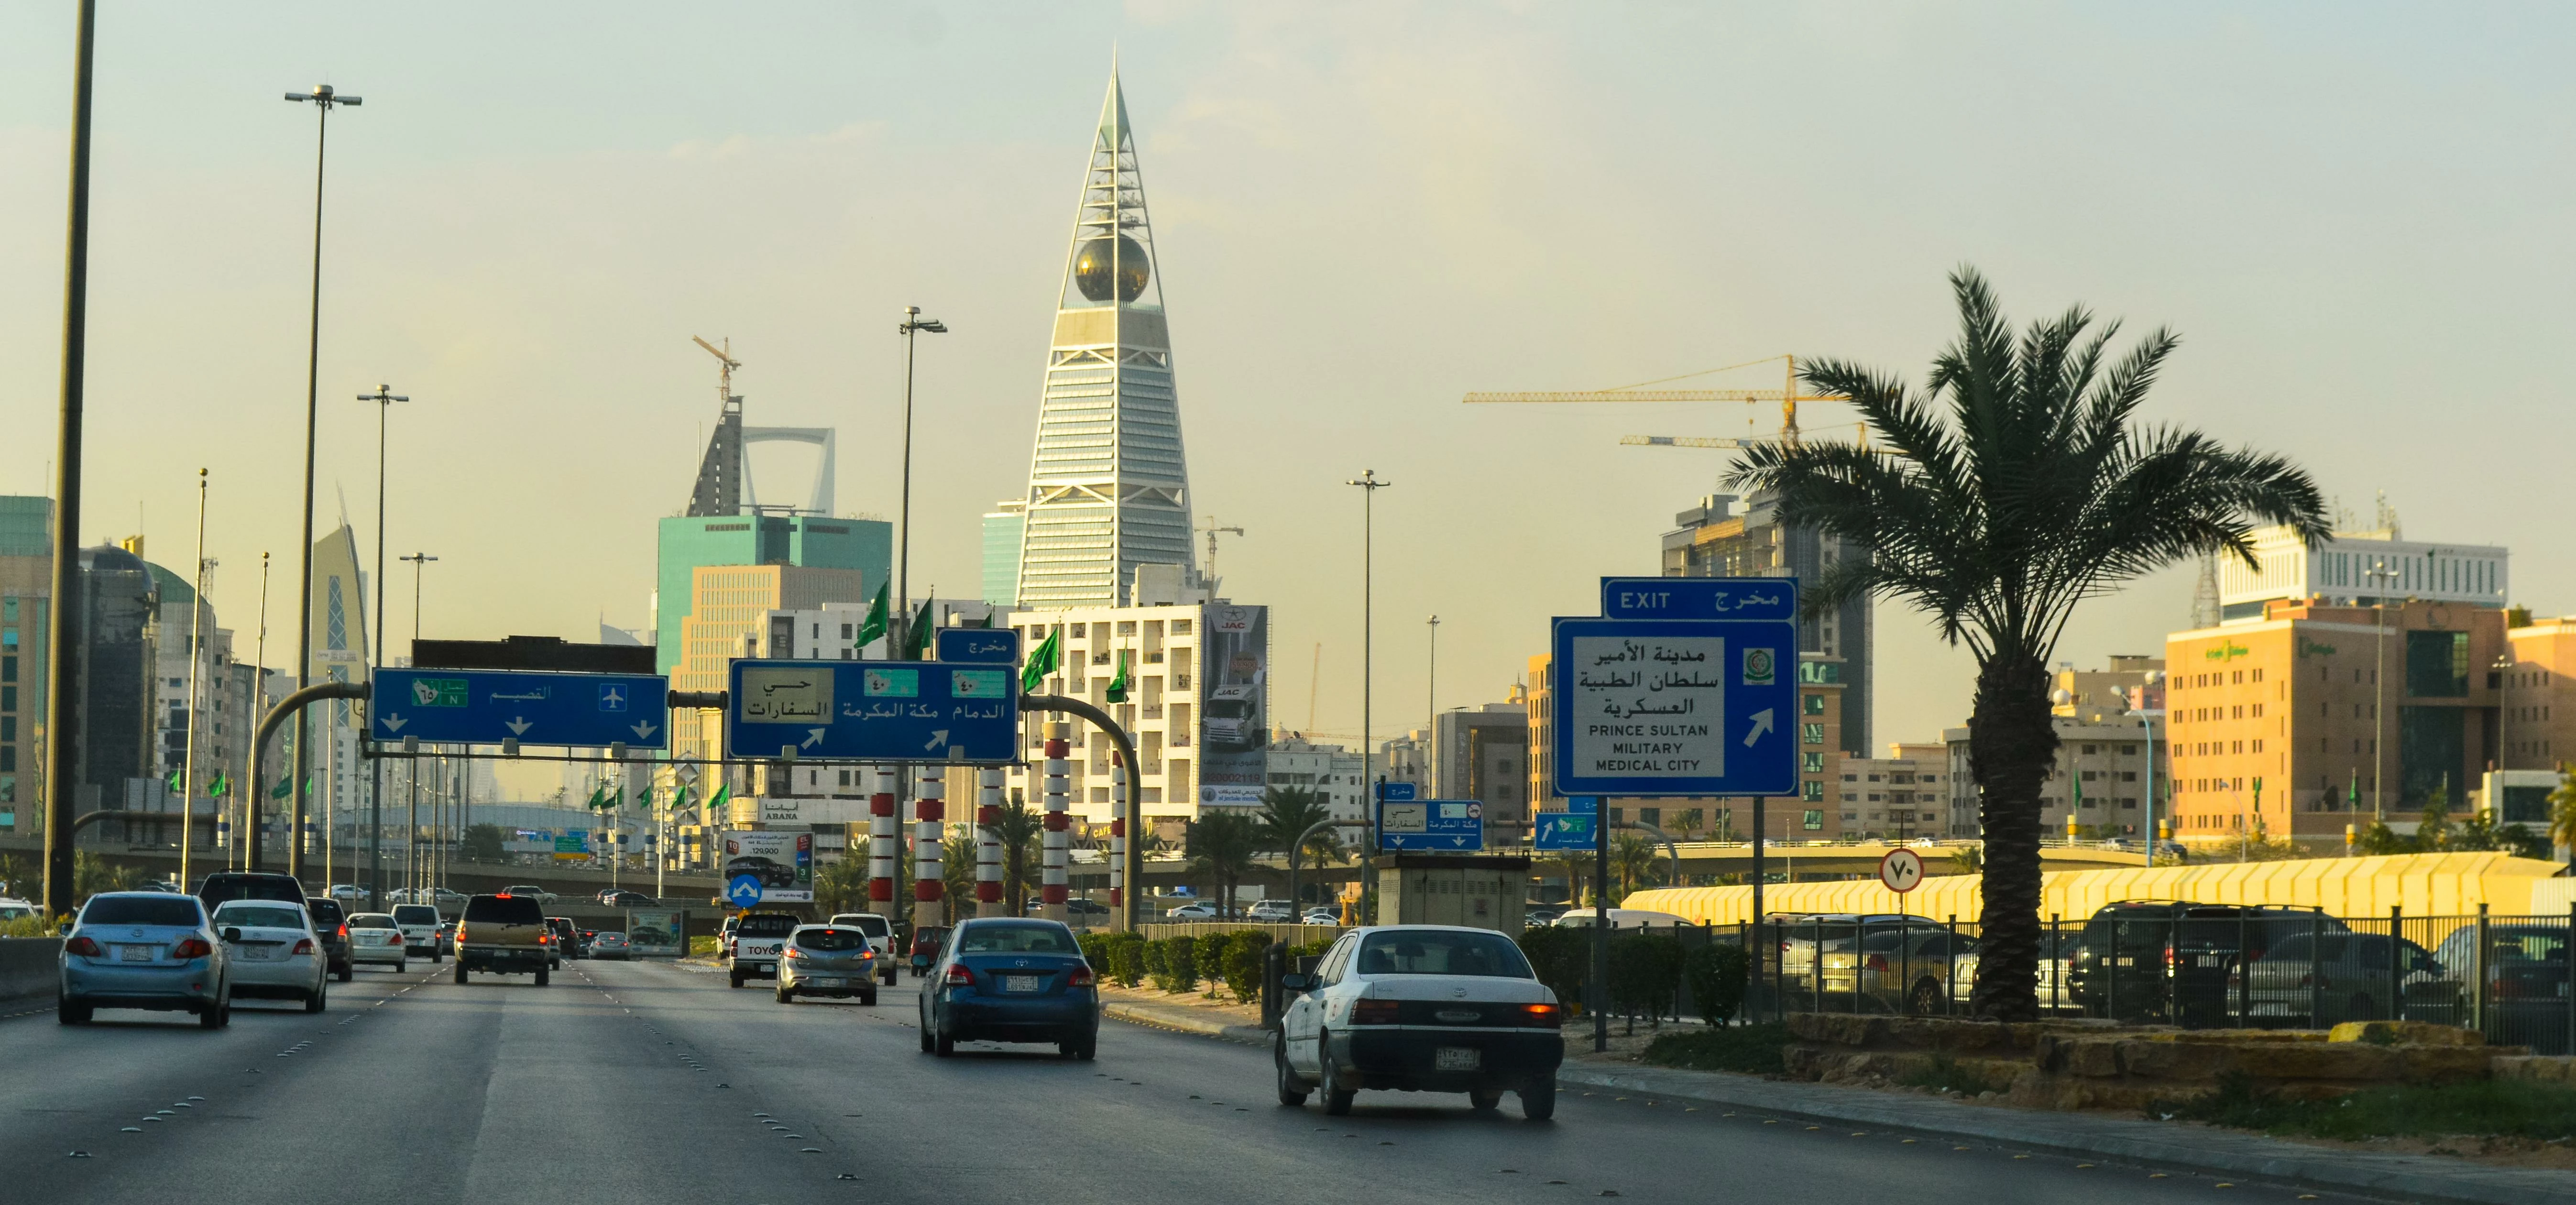 Driving north on King Fahd Road